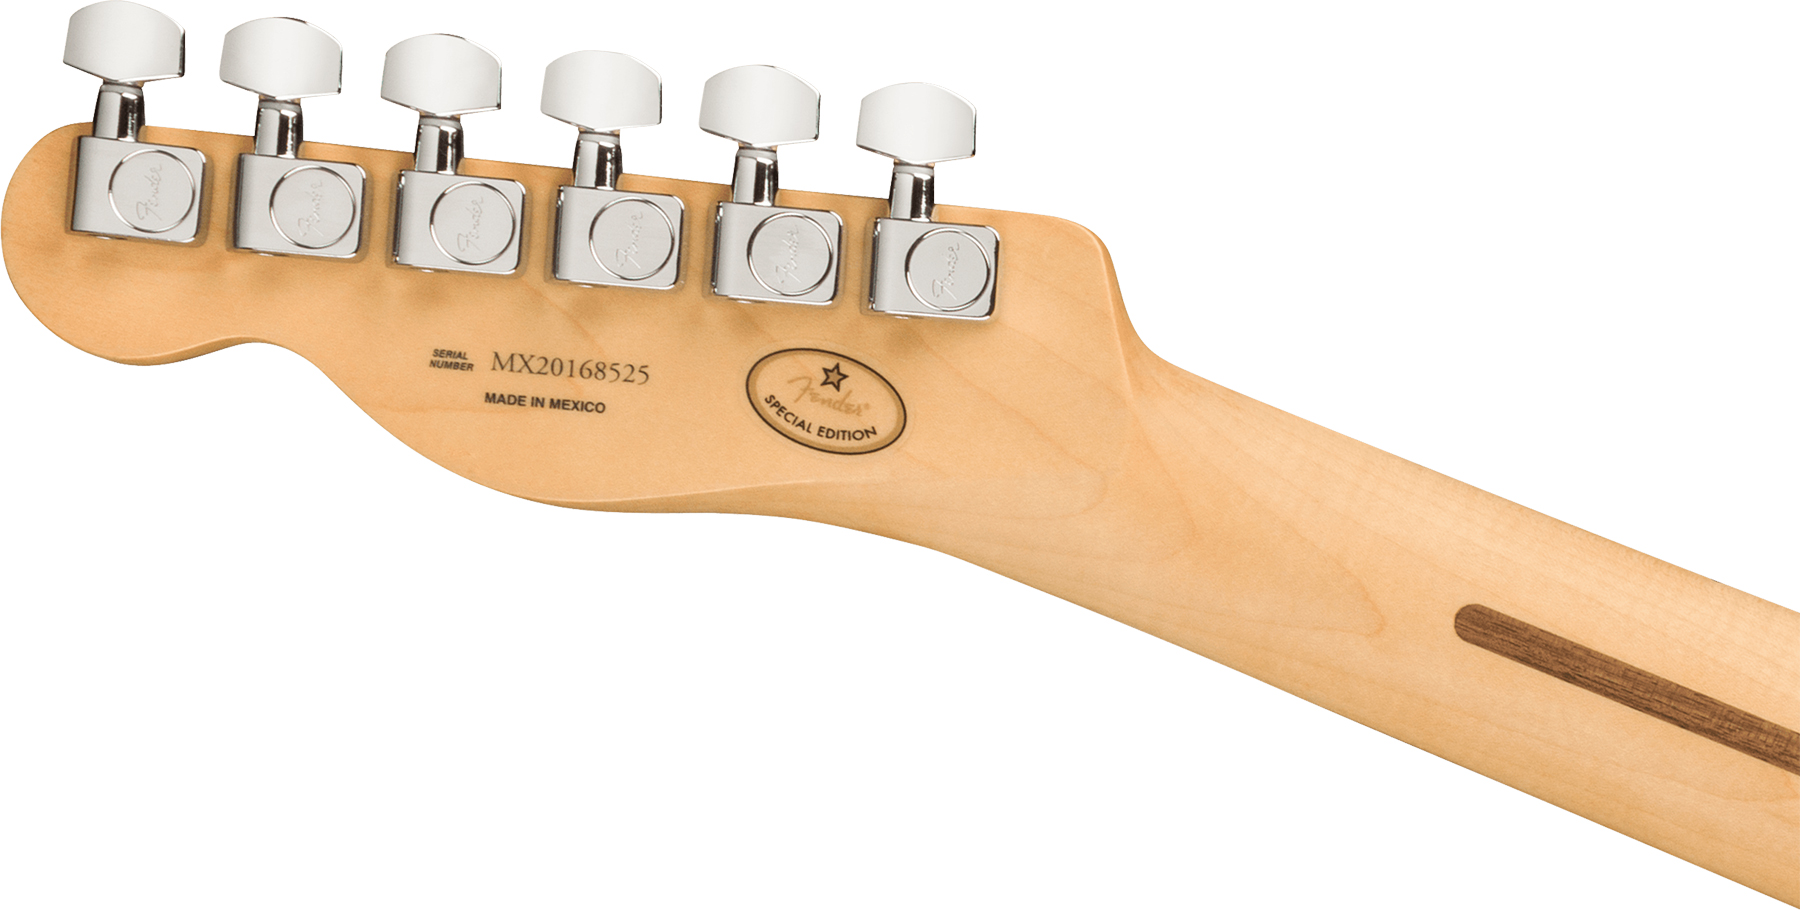 Fender Tele Player Ltd Mex 2s Ht Mn - Pacific Peach - Guitarra eléctrica con forma de tel - Variation 3